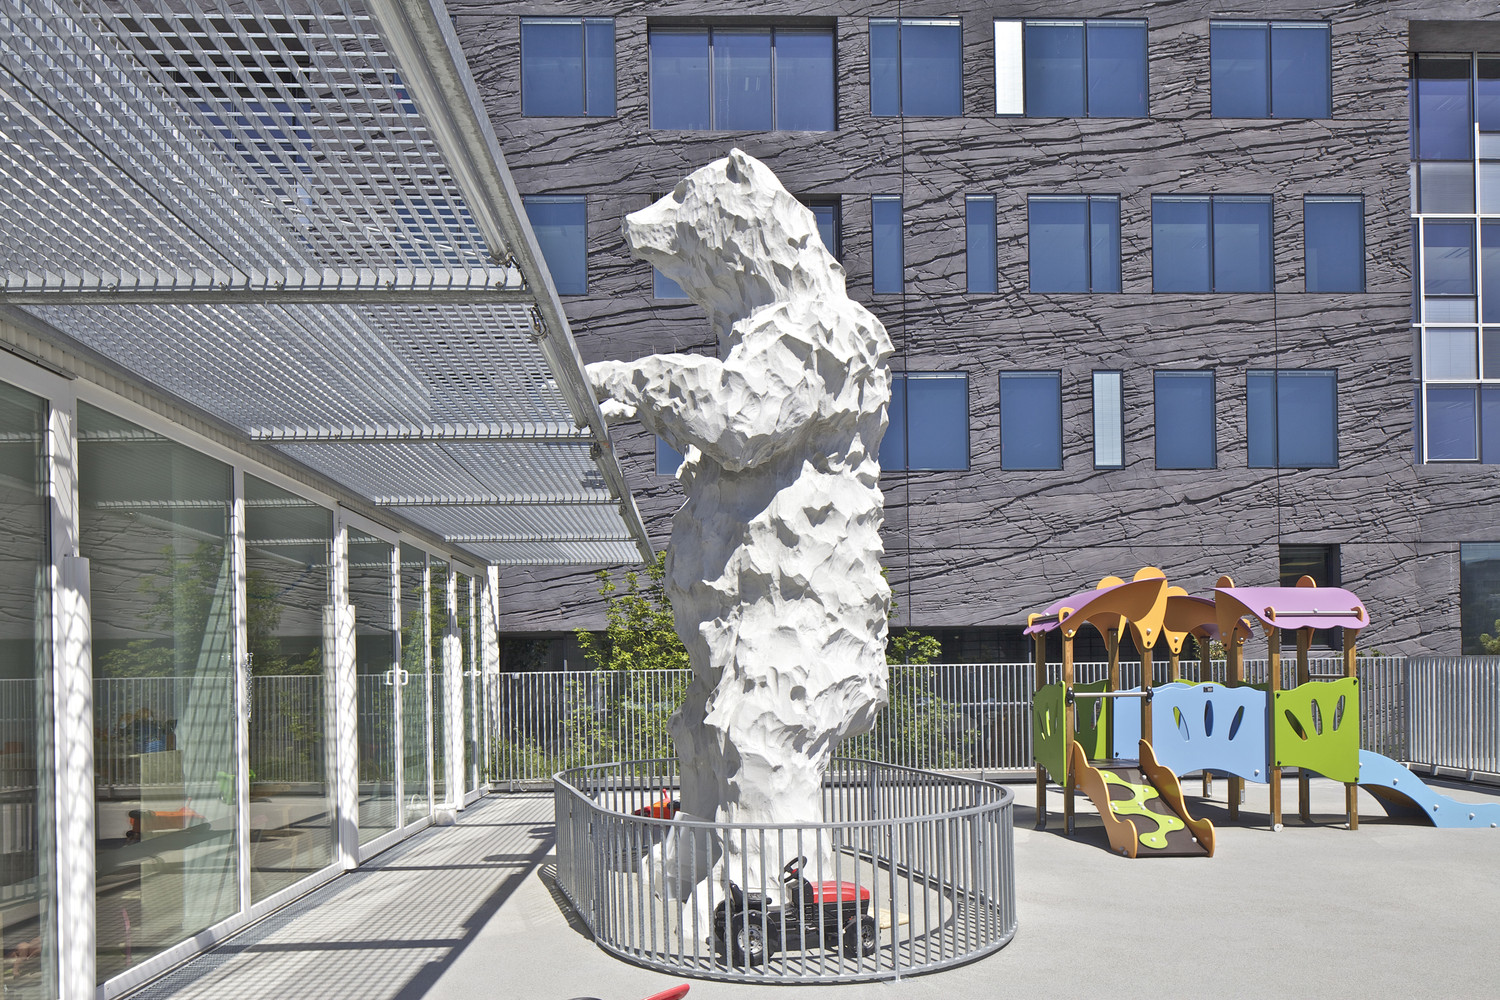 Giraffe Childcare Center by Hondelatte Laporte Architectes: Storytelling through Architecture - Sheet7